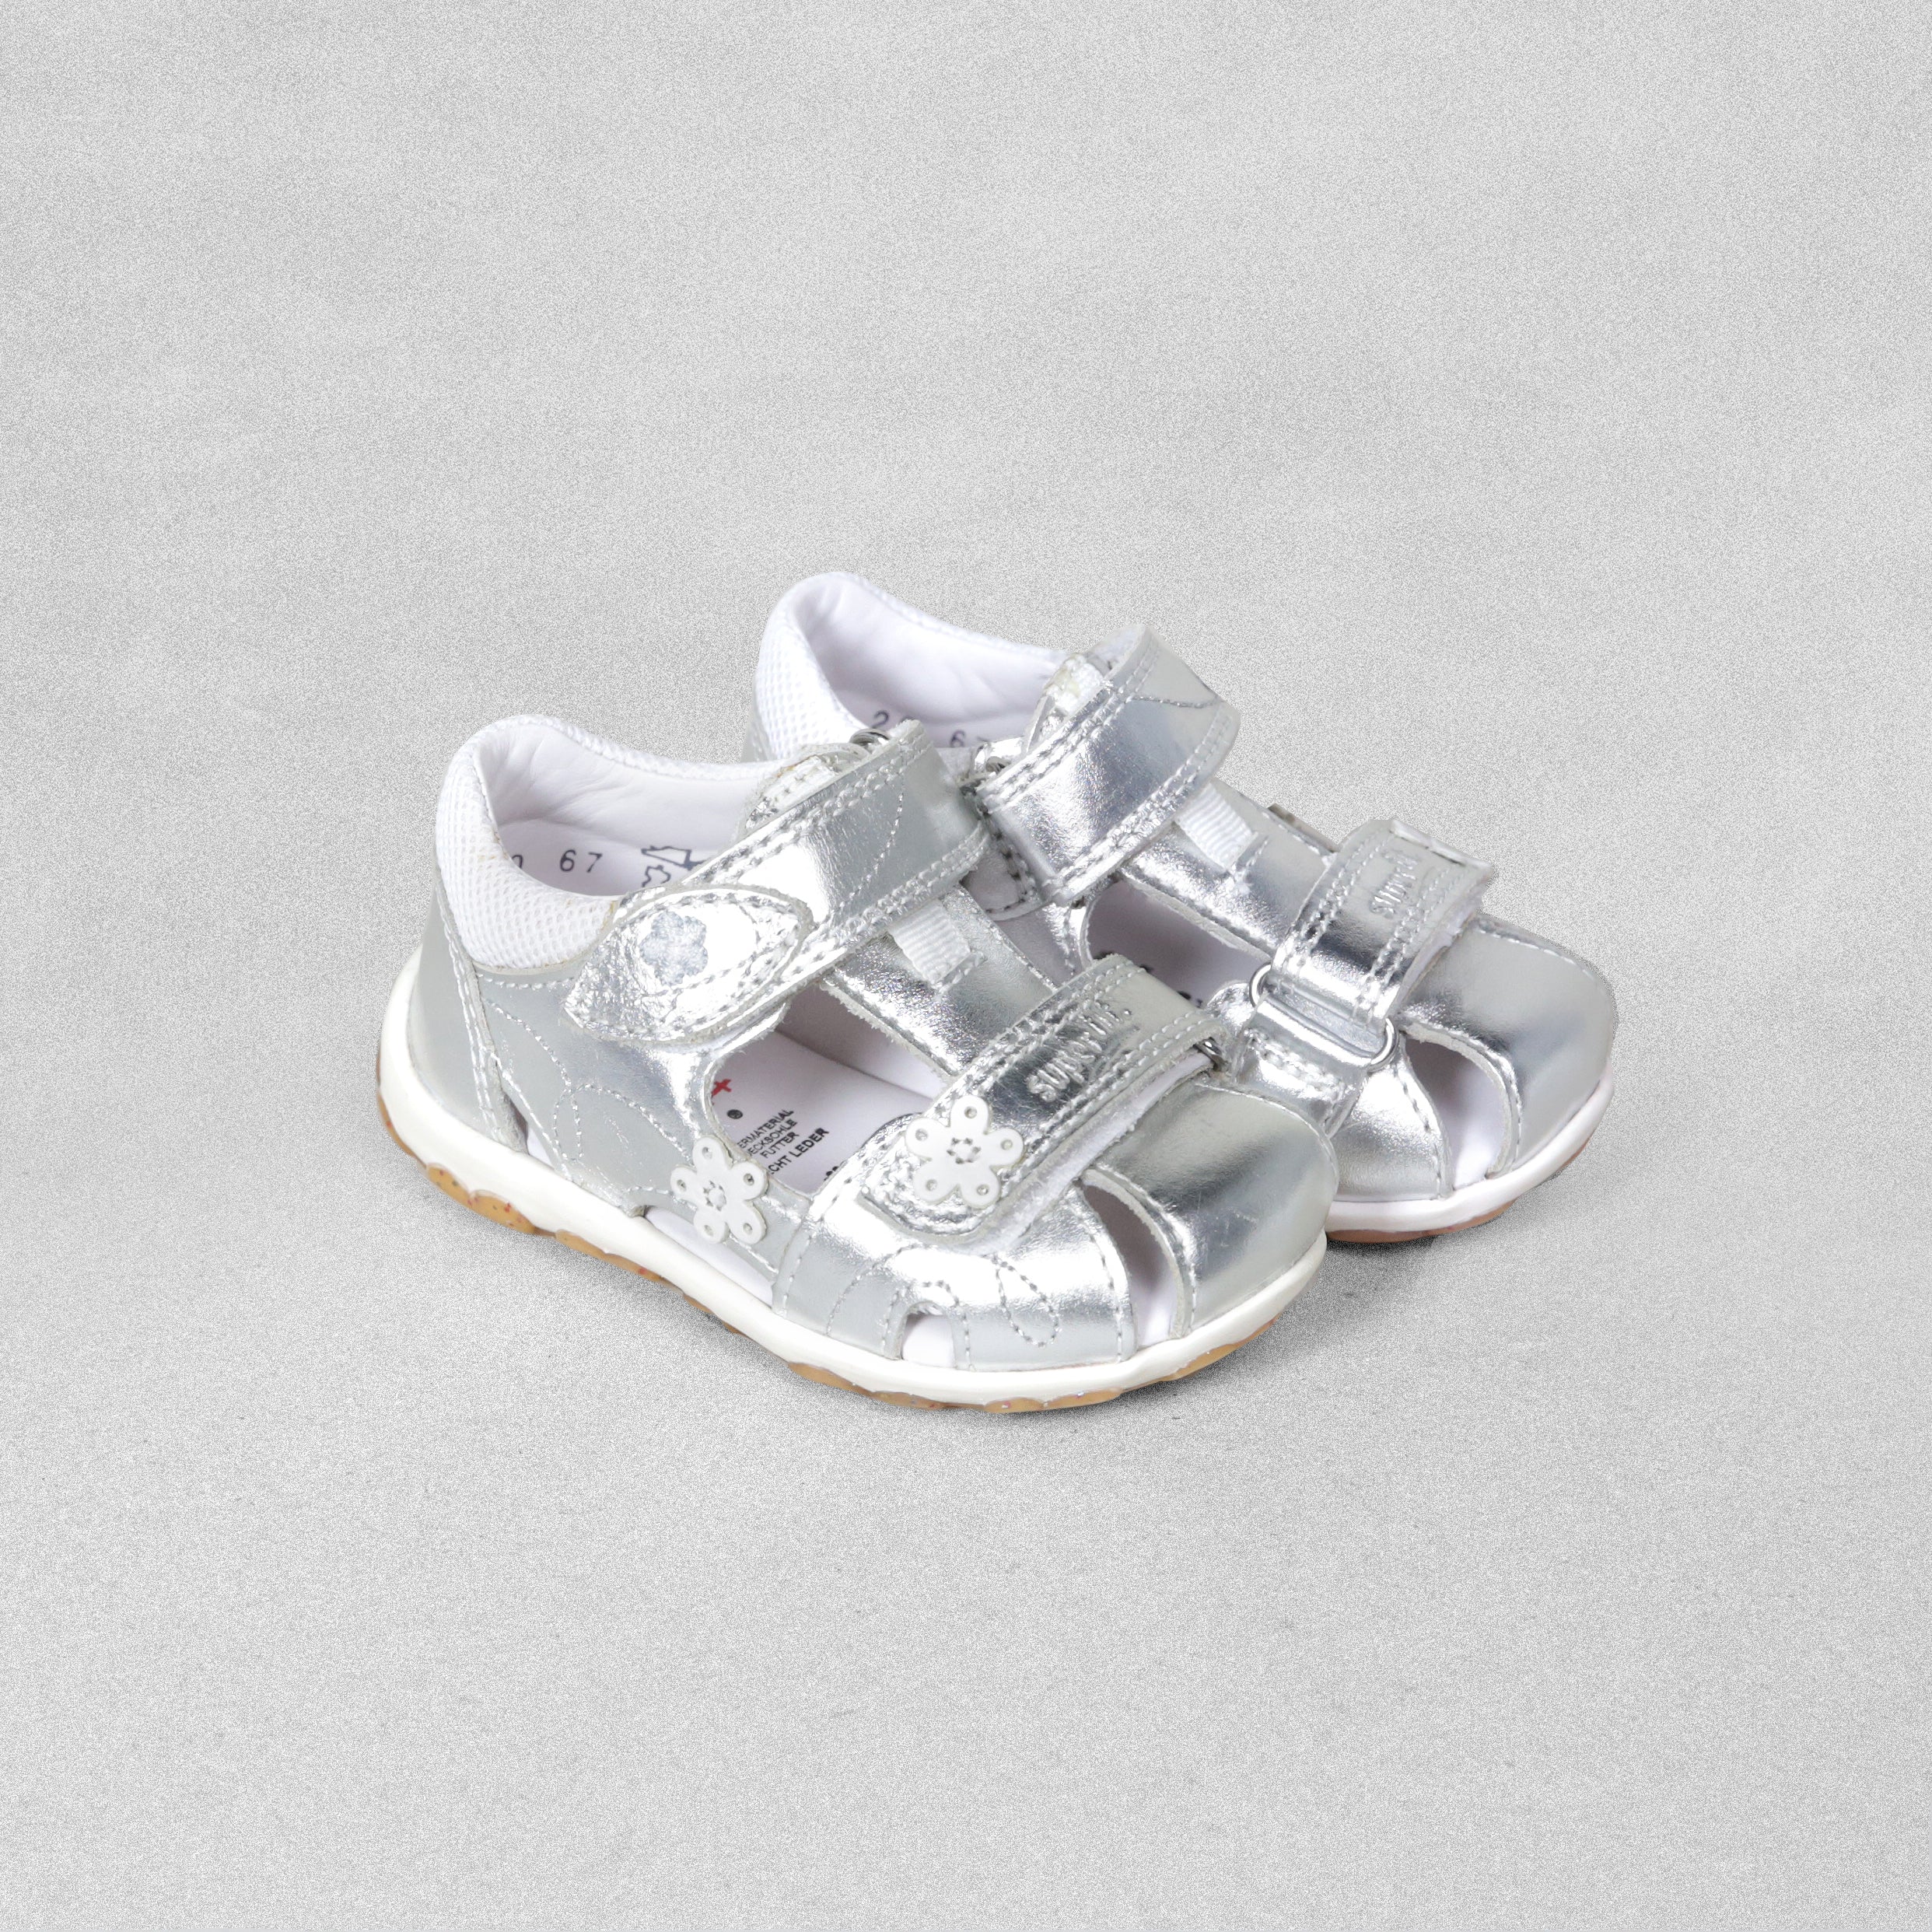 'Superfit' Silver Leather Sandals - UK Child Size 4 / EU 20